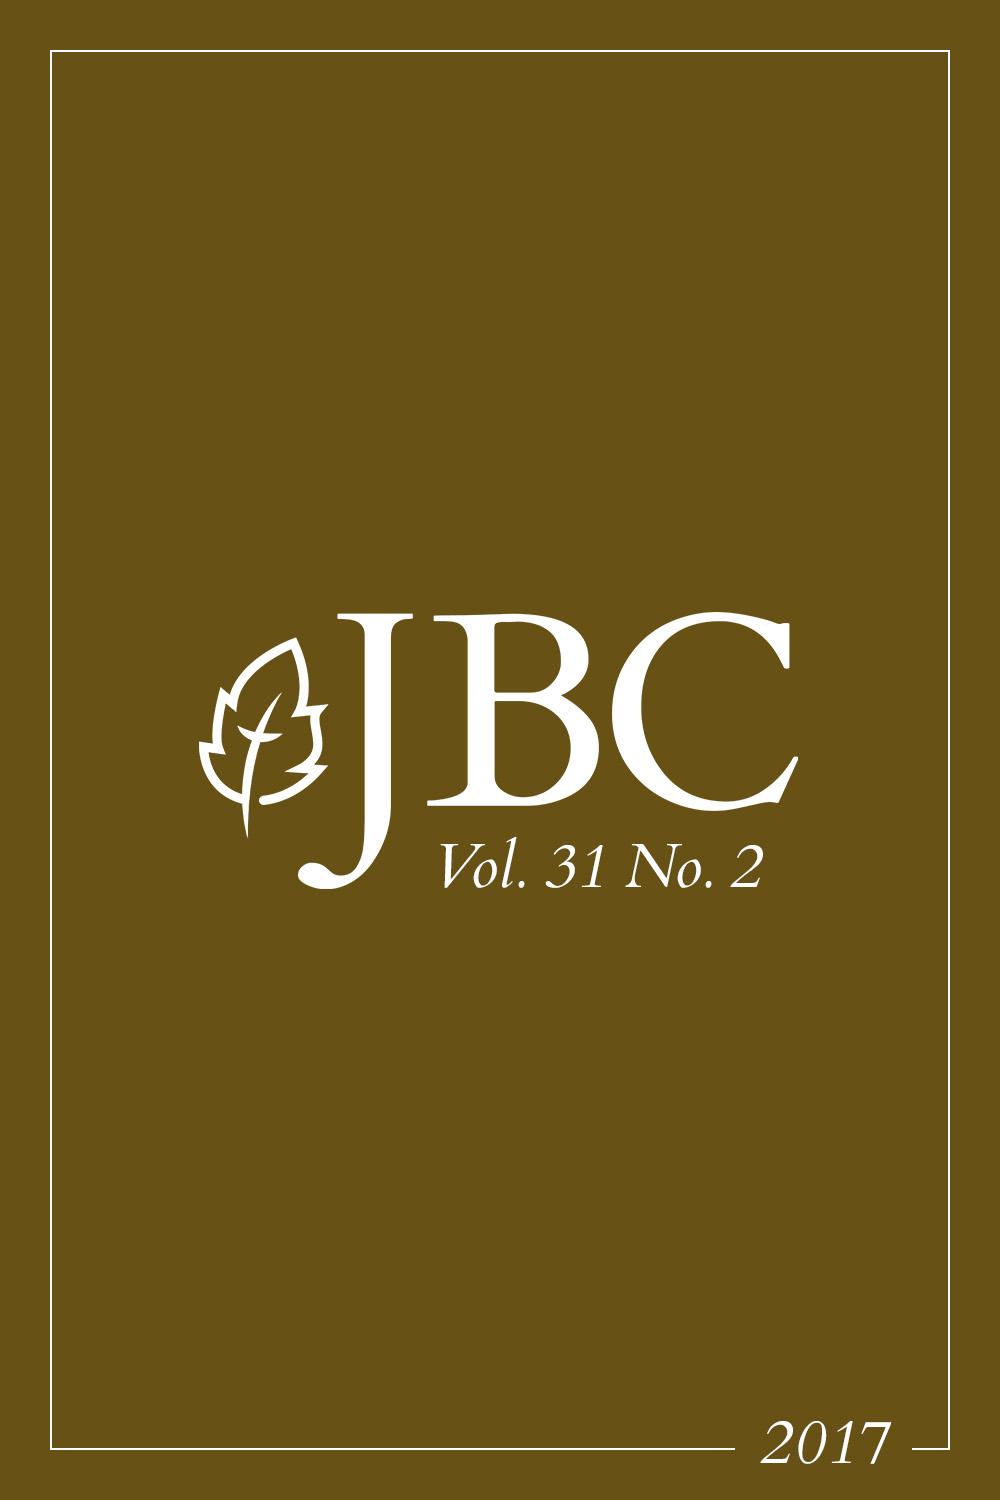 JBC Volume 31:2 (2017) PDF Featured Image